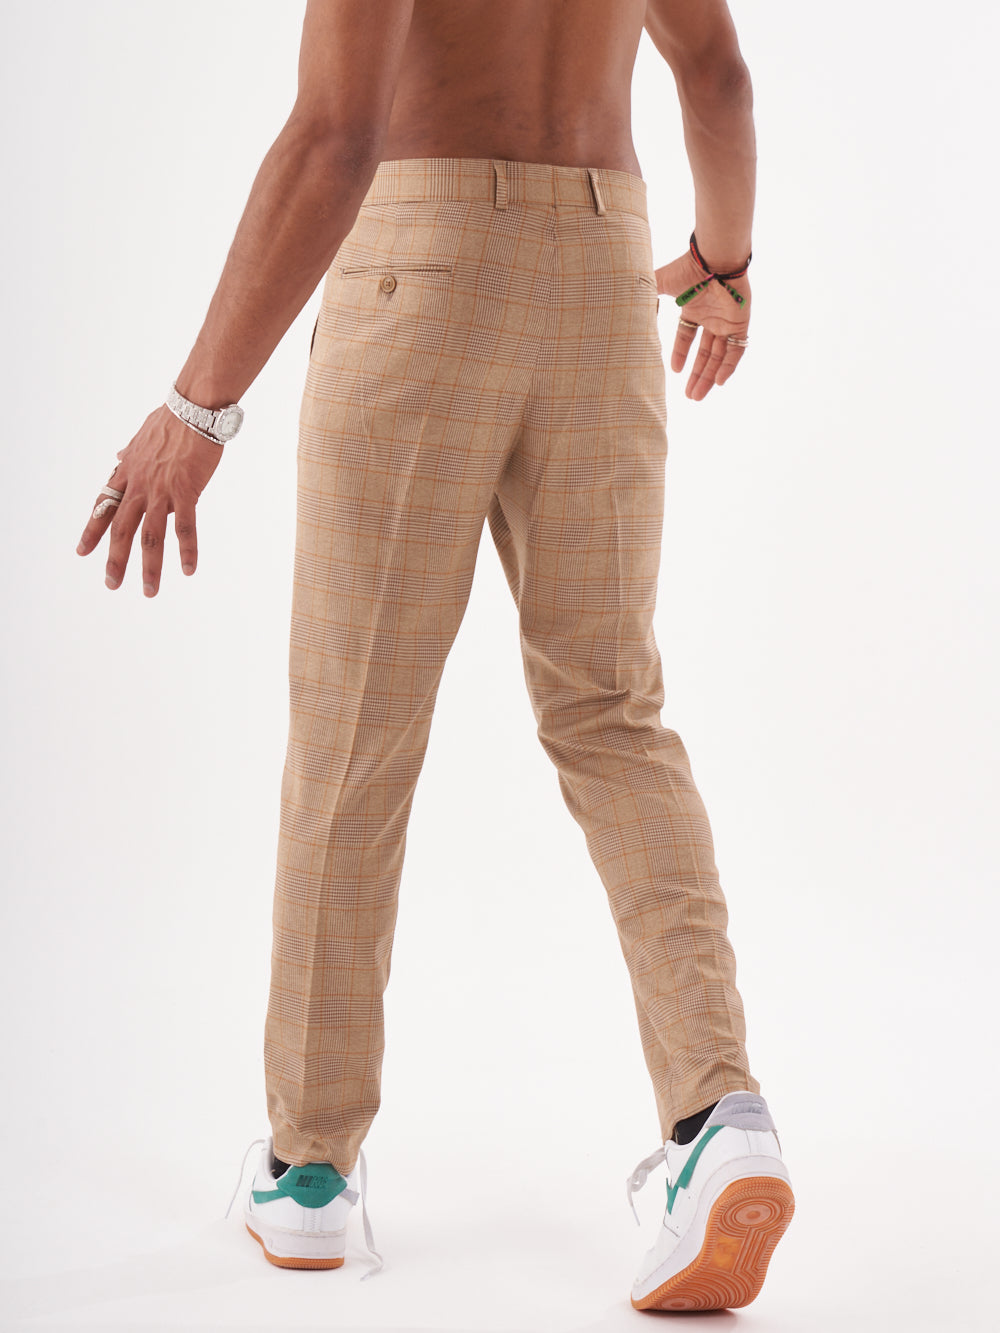 A man wearing a BAROT suit pants.